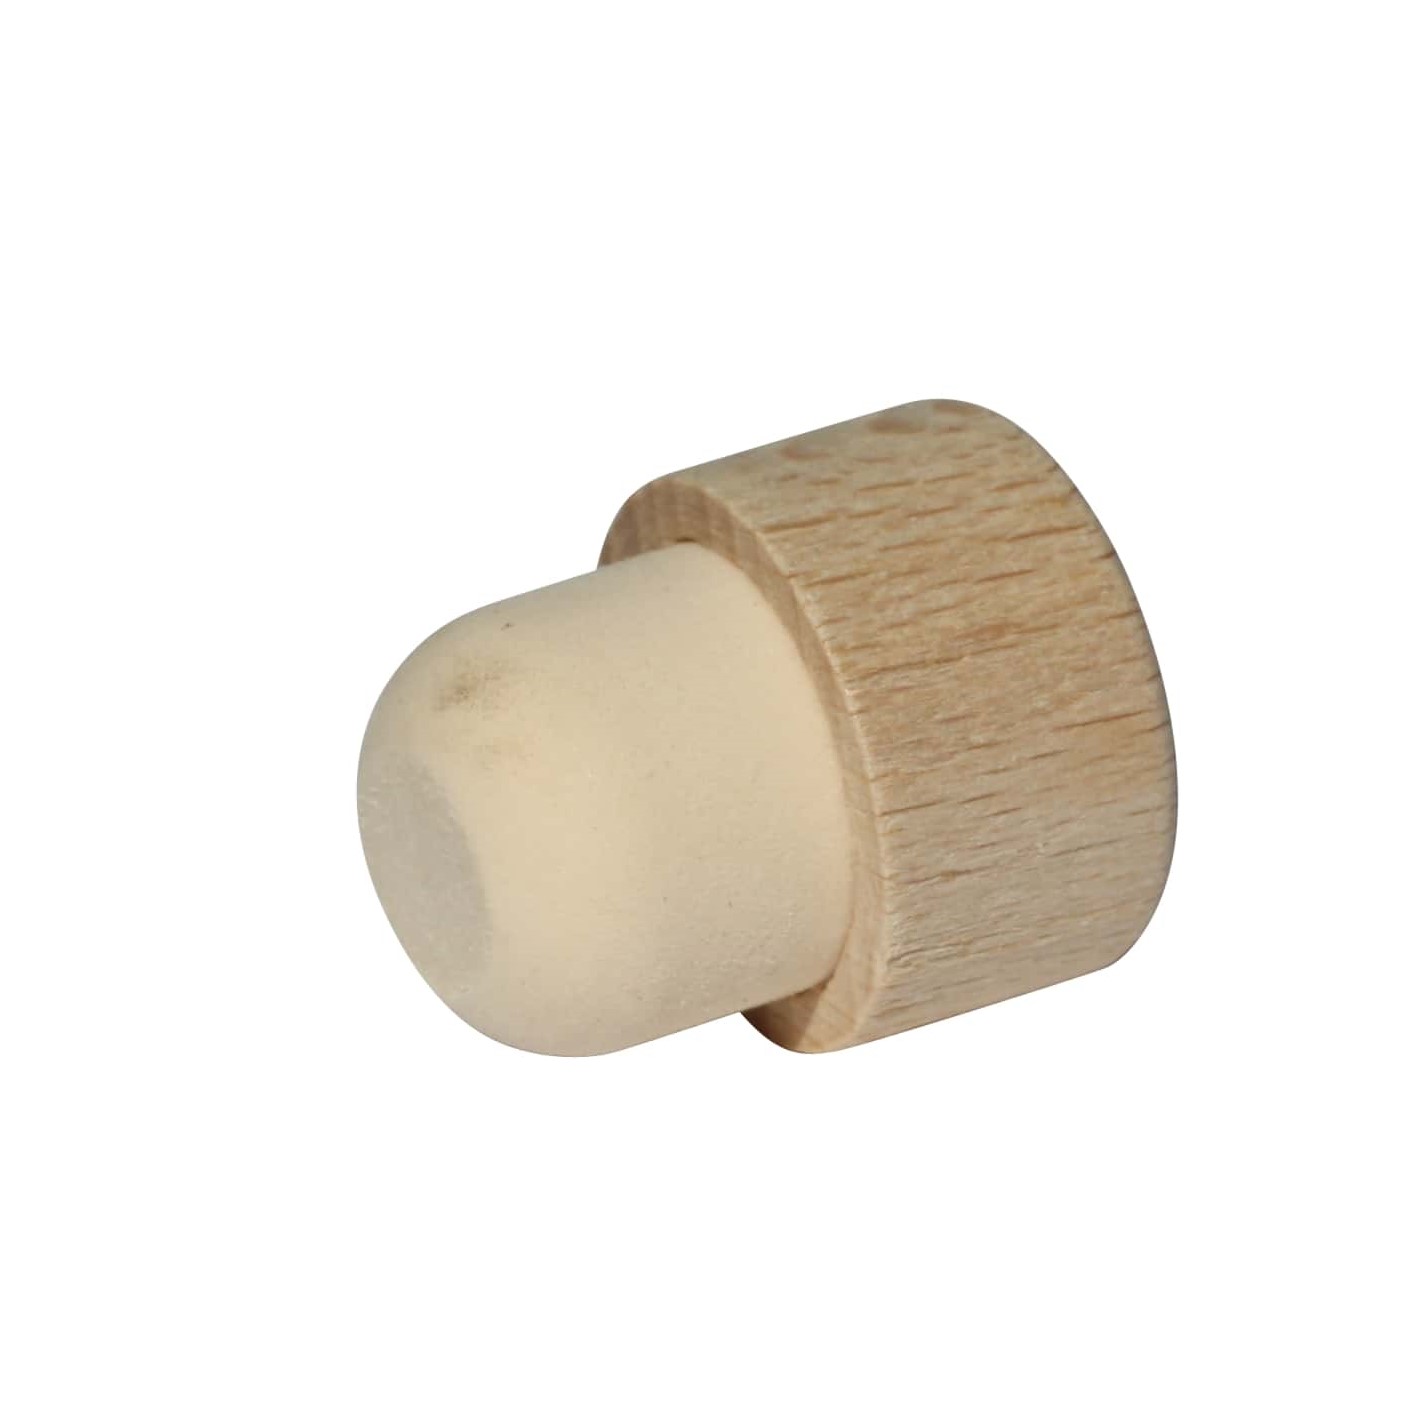 16.5 mm mushroom cork, wood, for opening: cork